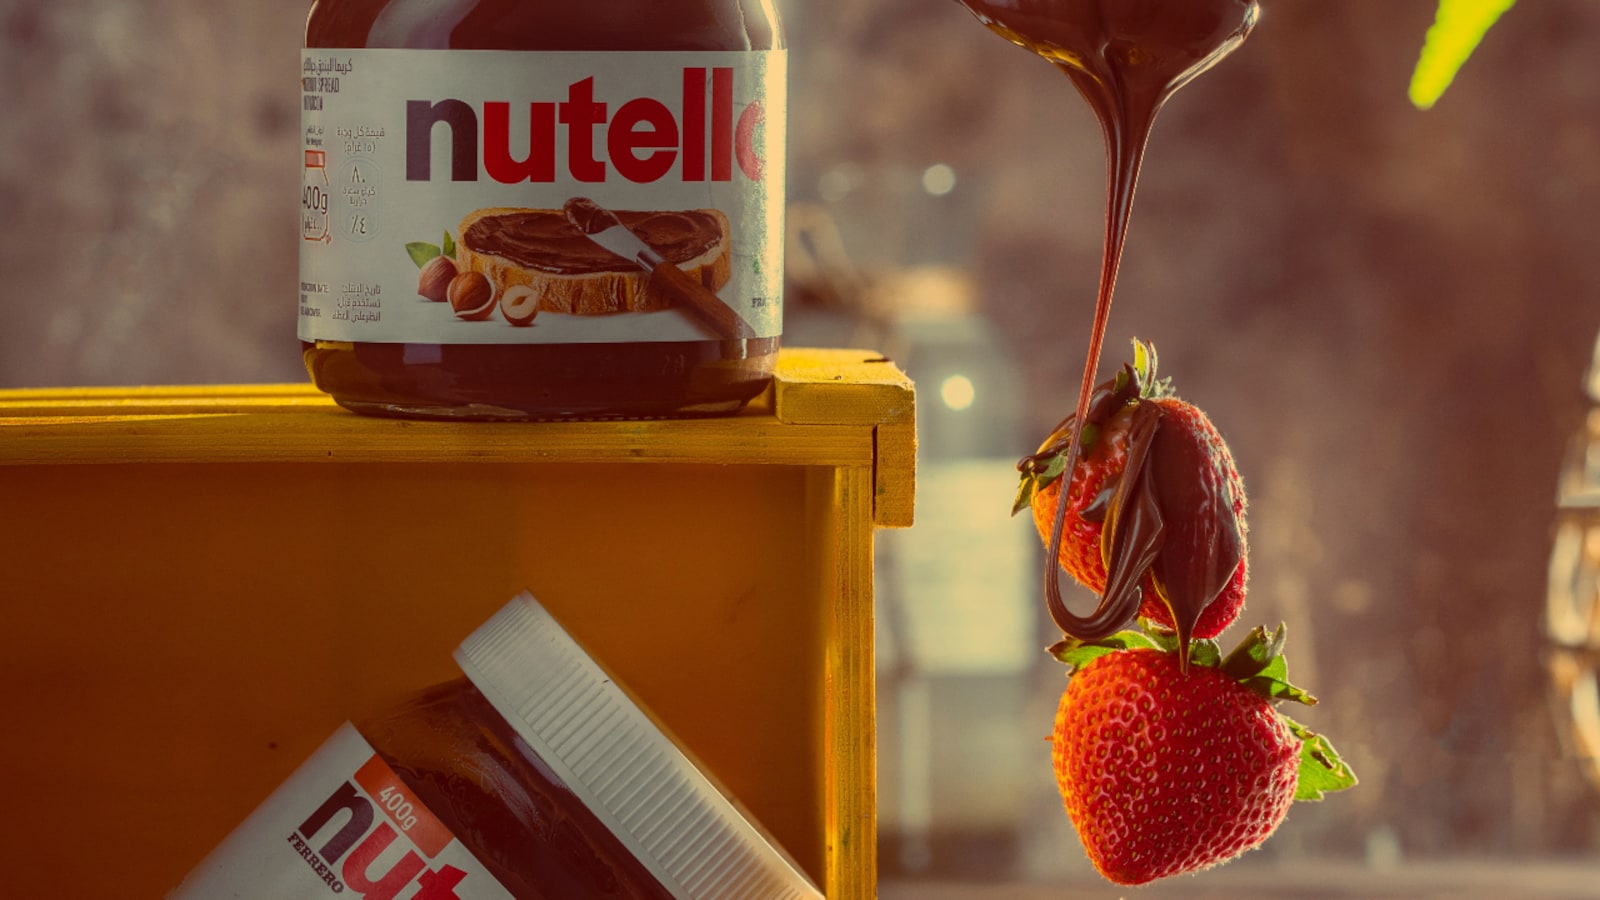 Nutella - Nut-Ella or “New-Tell-Uh”